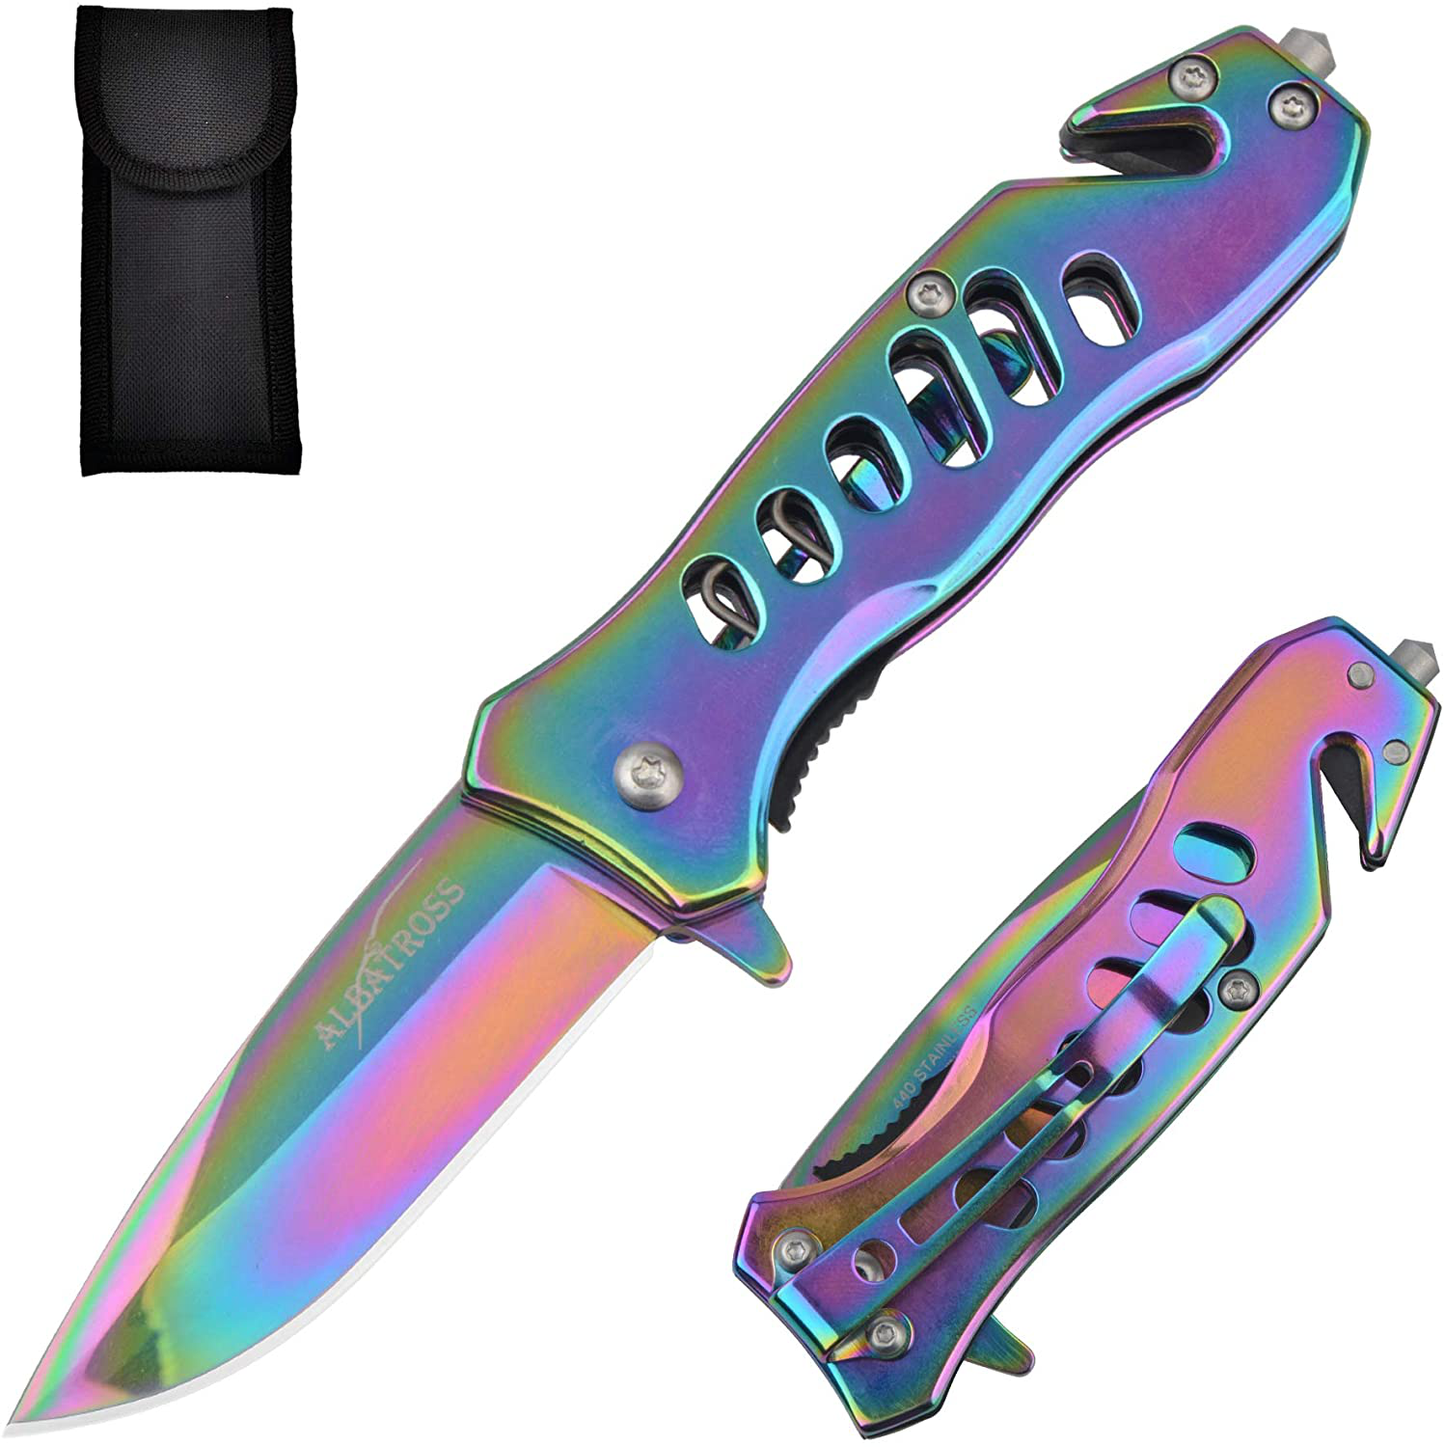 ALBATROSS EDC Cool Sharp Tactical Folding Pocket Knife,SpeedSafe Spring Assisted Opening Knifes with Liner Lock,Pocketclip,Glass Breaker,Seatbelt Cutter(Multi)